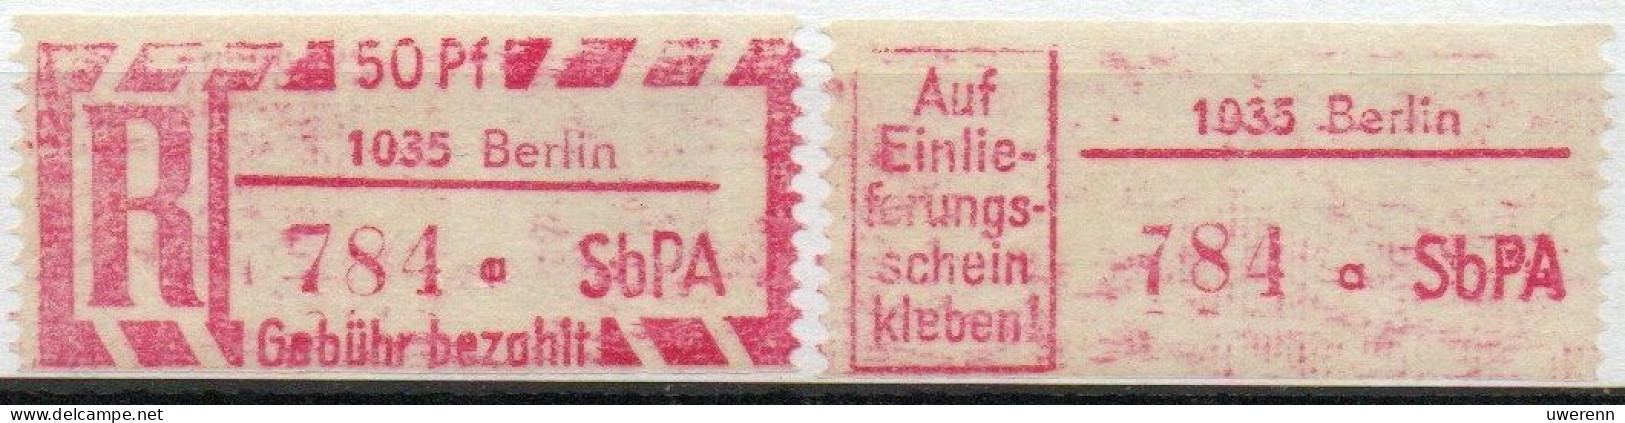 DDR Einschreibemarke Berlin SbPA Postfrisch, EM2B-1035aI Gt - Etichette Di Raccomandazione